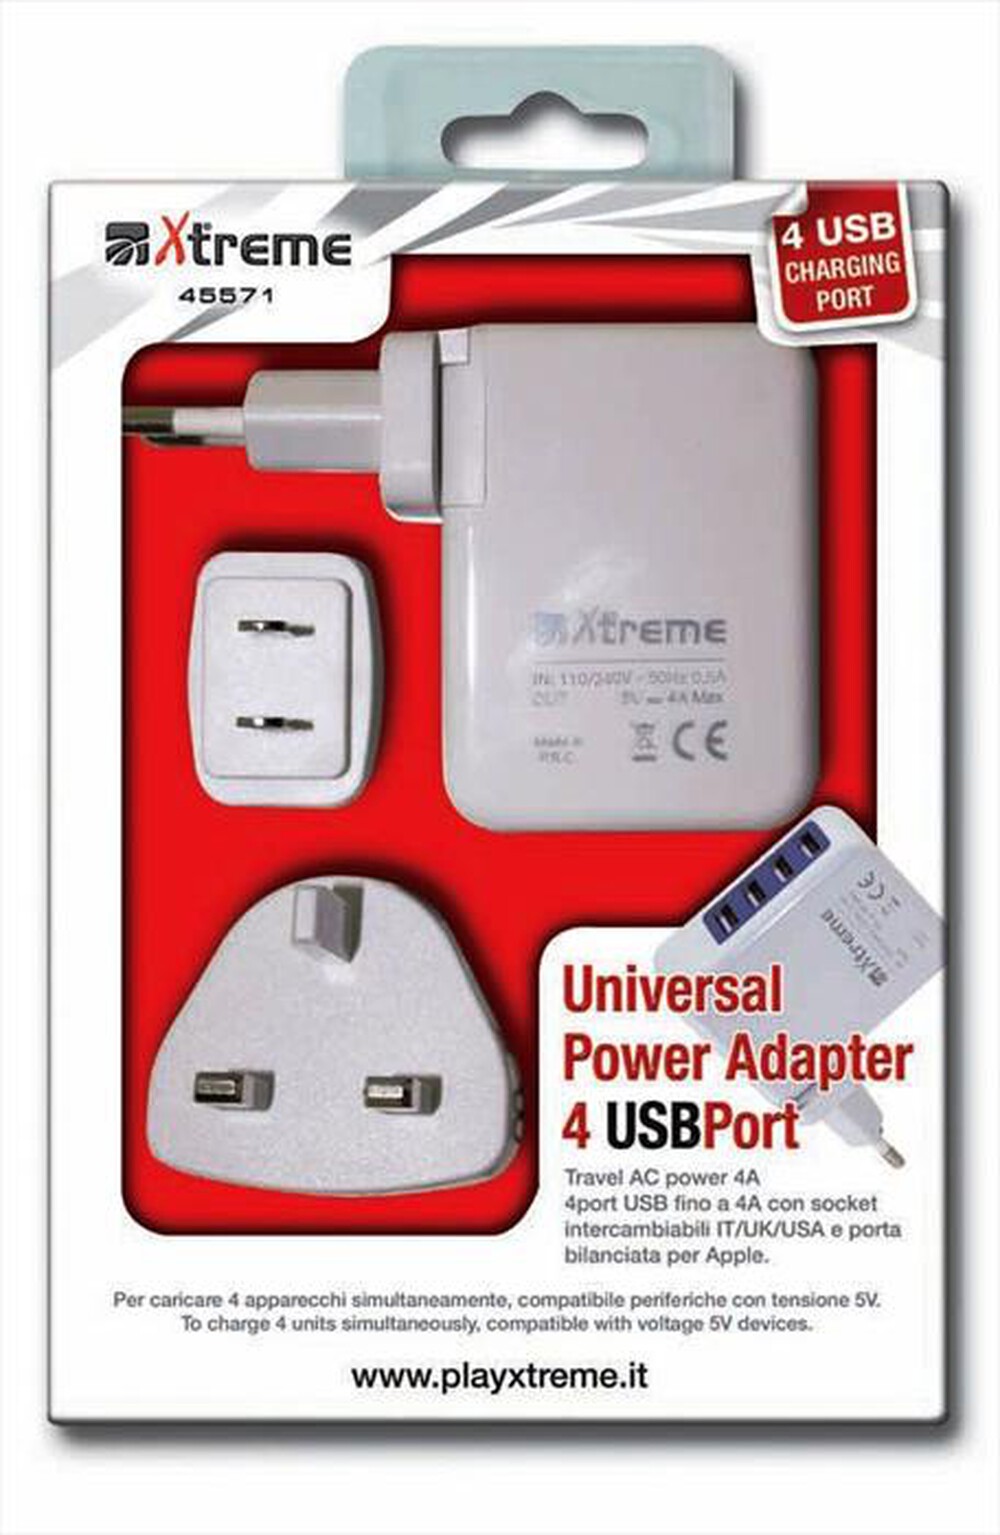 "XTREME - 45571 - Alimentatore 4 porte USB"